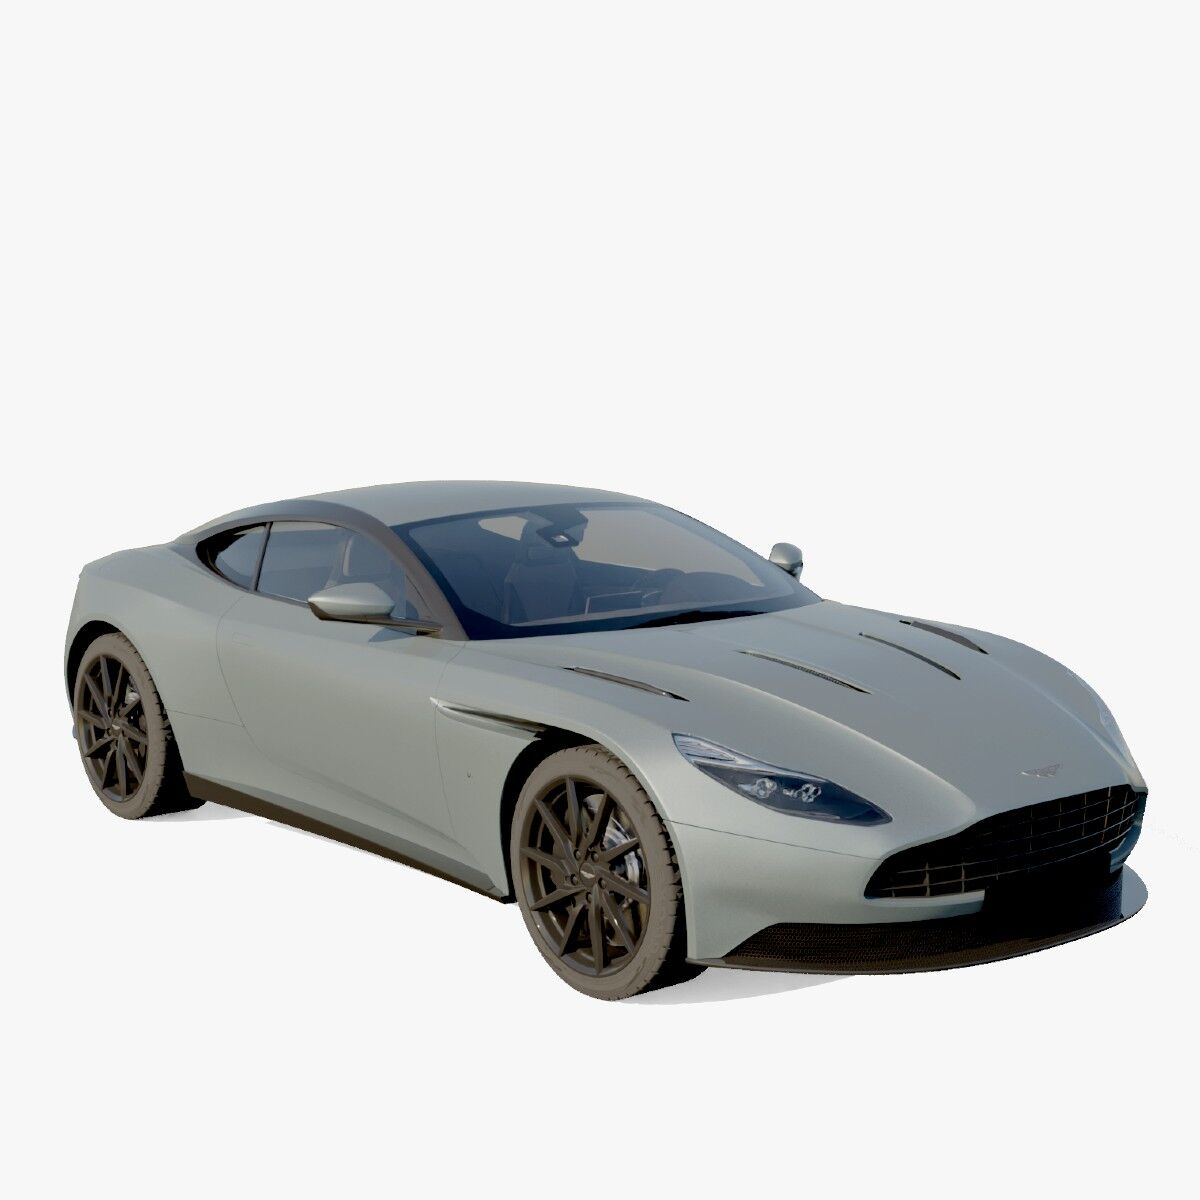 Aston martin db11 3d model Textures are baked in Blender